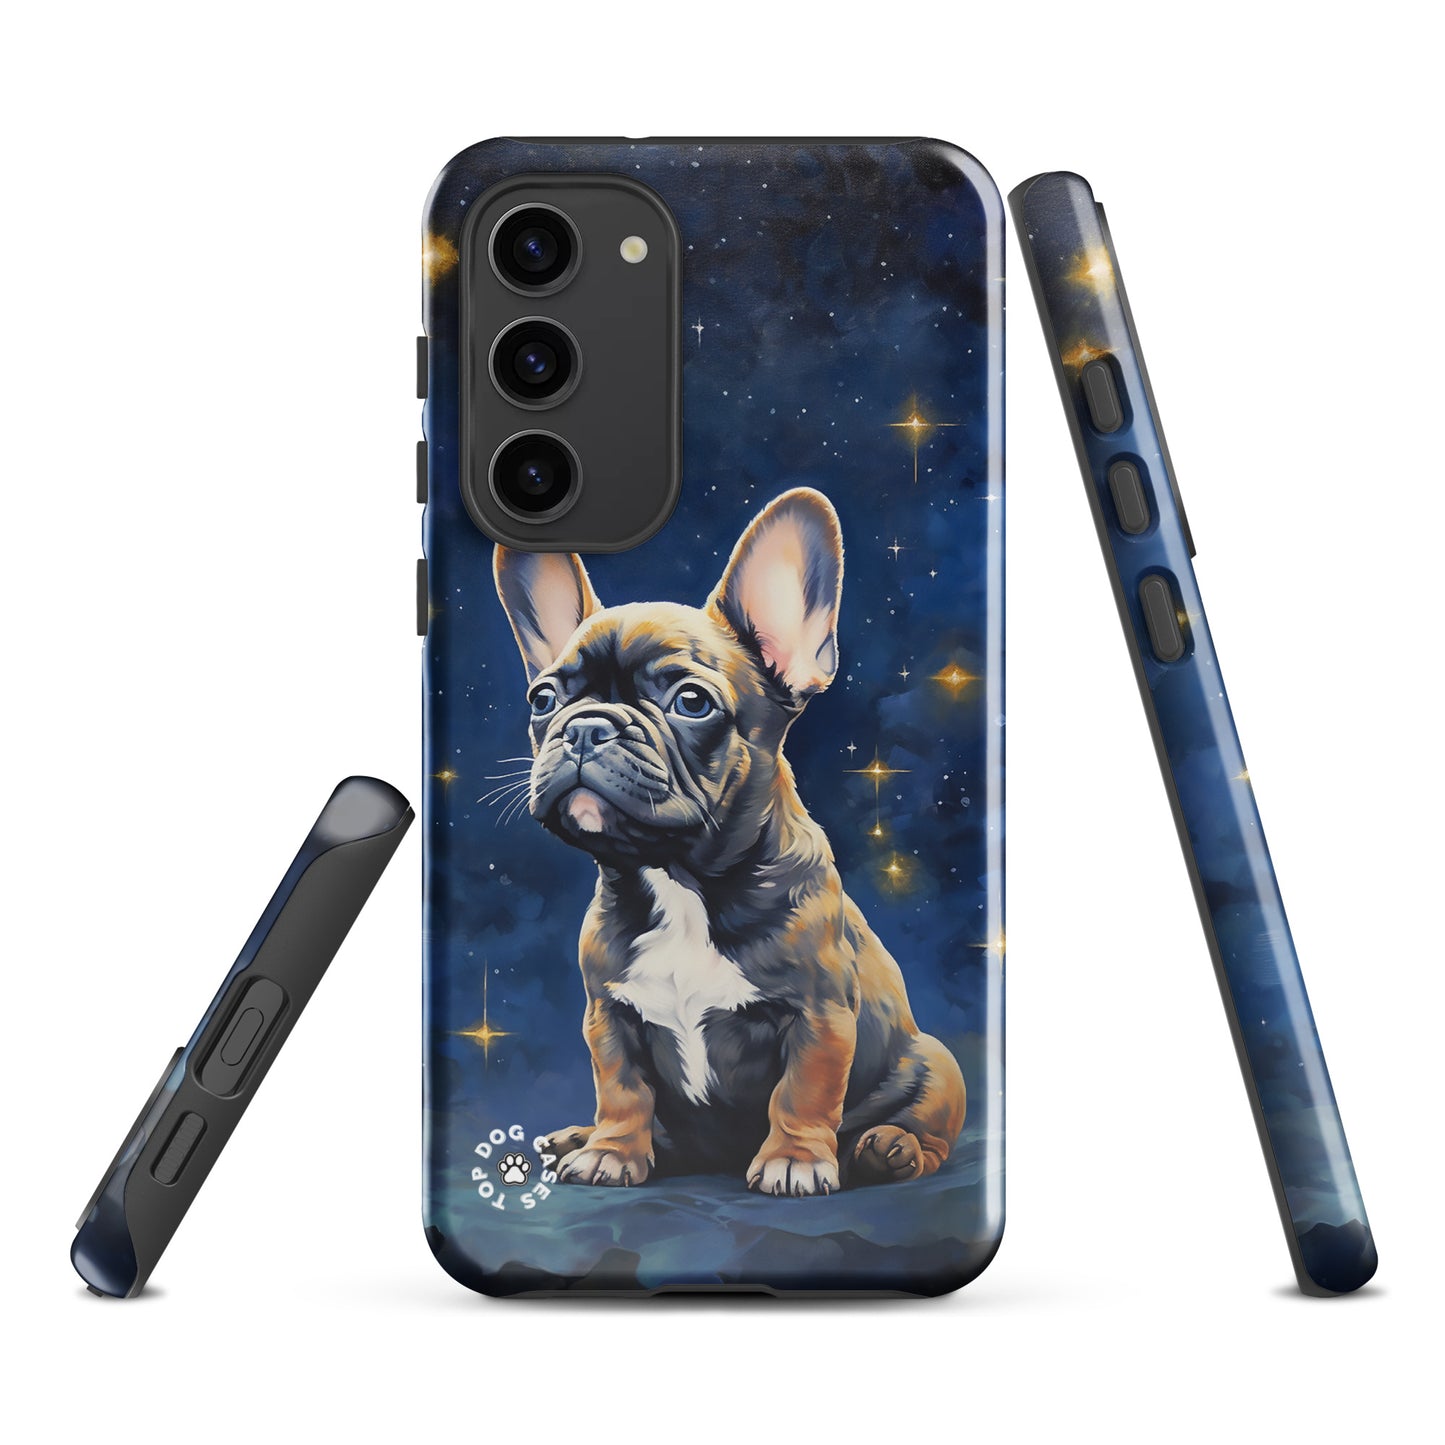 French Bulldog - Samsung S23 Case - Top Dog Cases - #CuteDog, #CuteDogs, #CutePhoneCases, #DogPhoneCase, #dogs, #French Bulldog, #FrenchBulldog, #Samsung, #SamsungGalaxy, #SamsungGalaxyCase, #SamsungGalaxyS23, #SamsungGalaxyS23Plus, #SamsungGalaxyS23Ultra, #SamsungPhoneCase